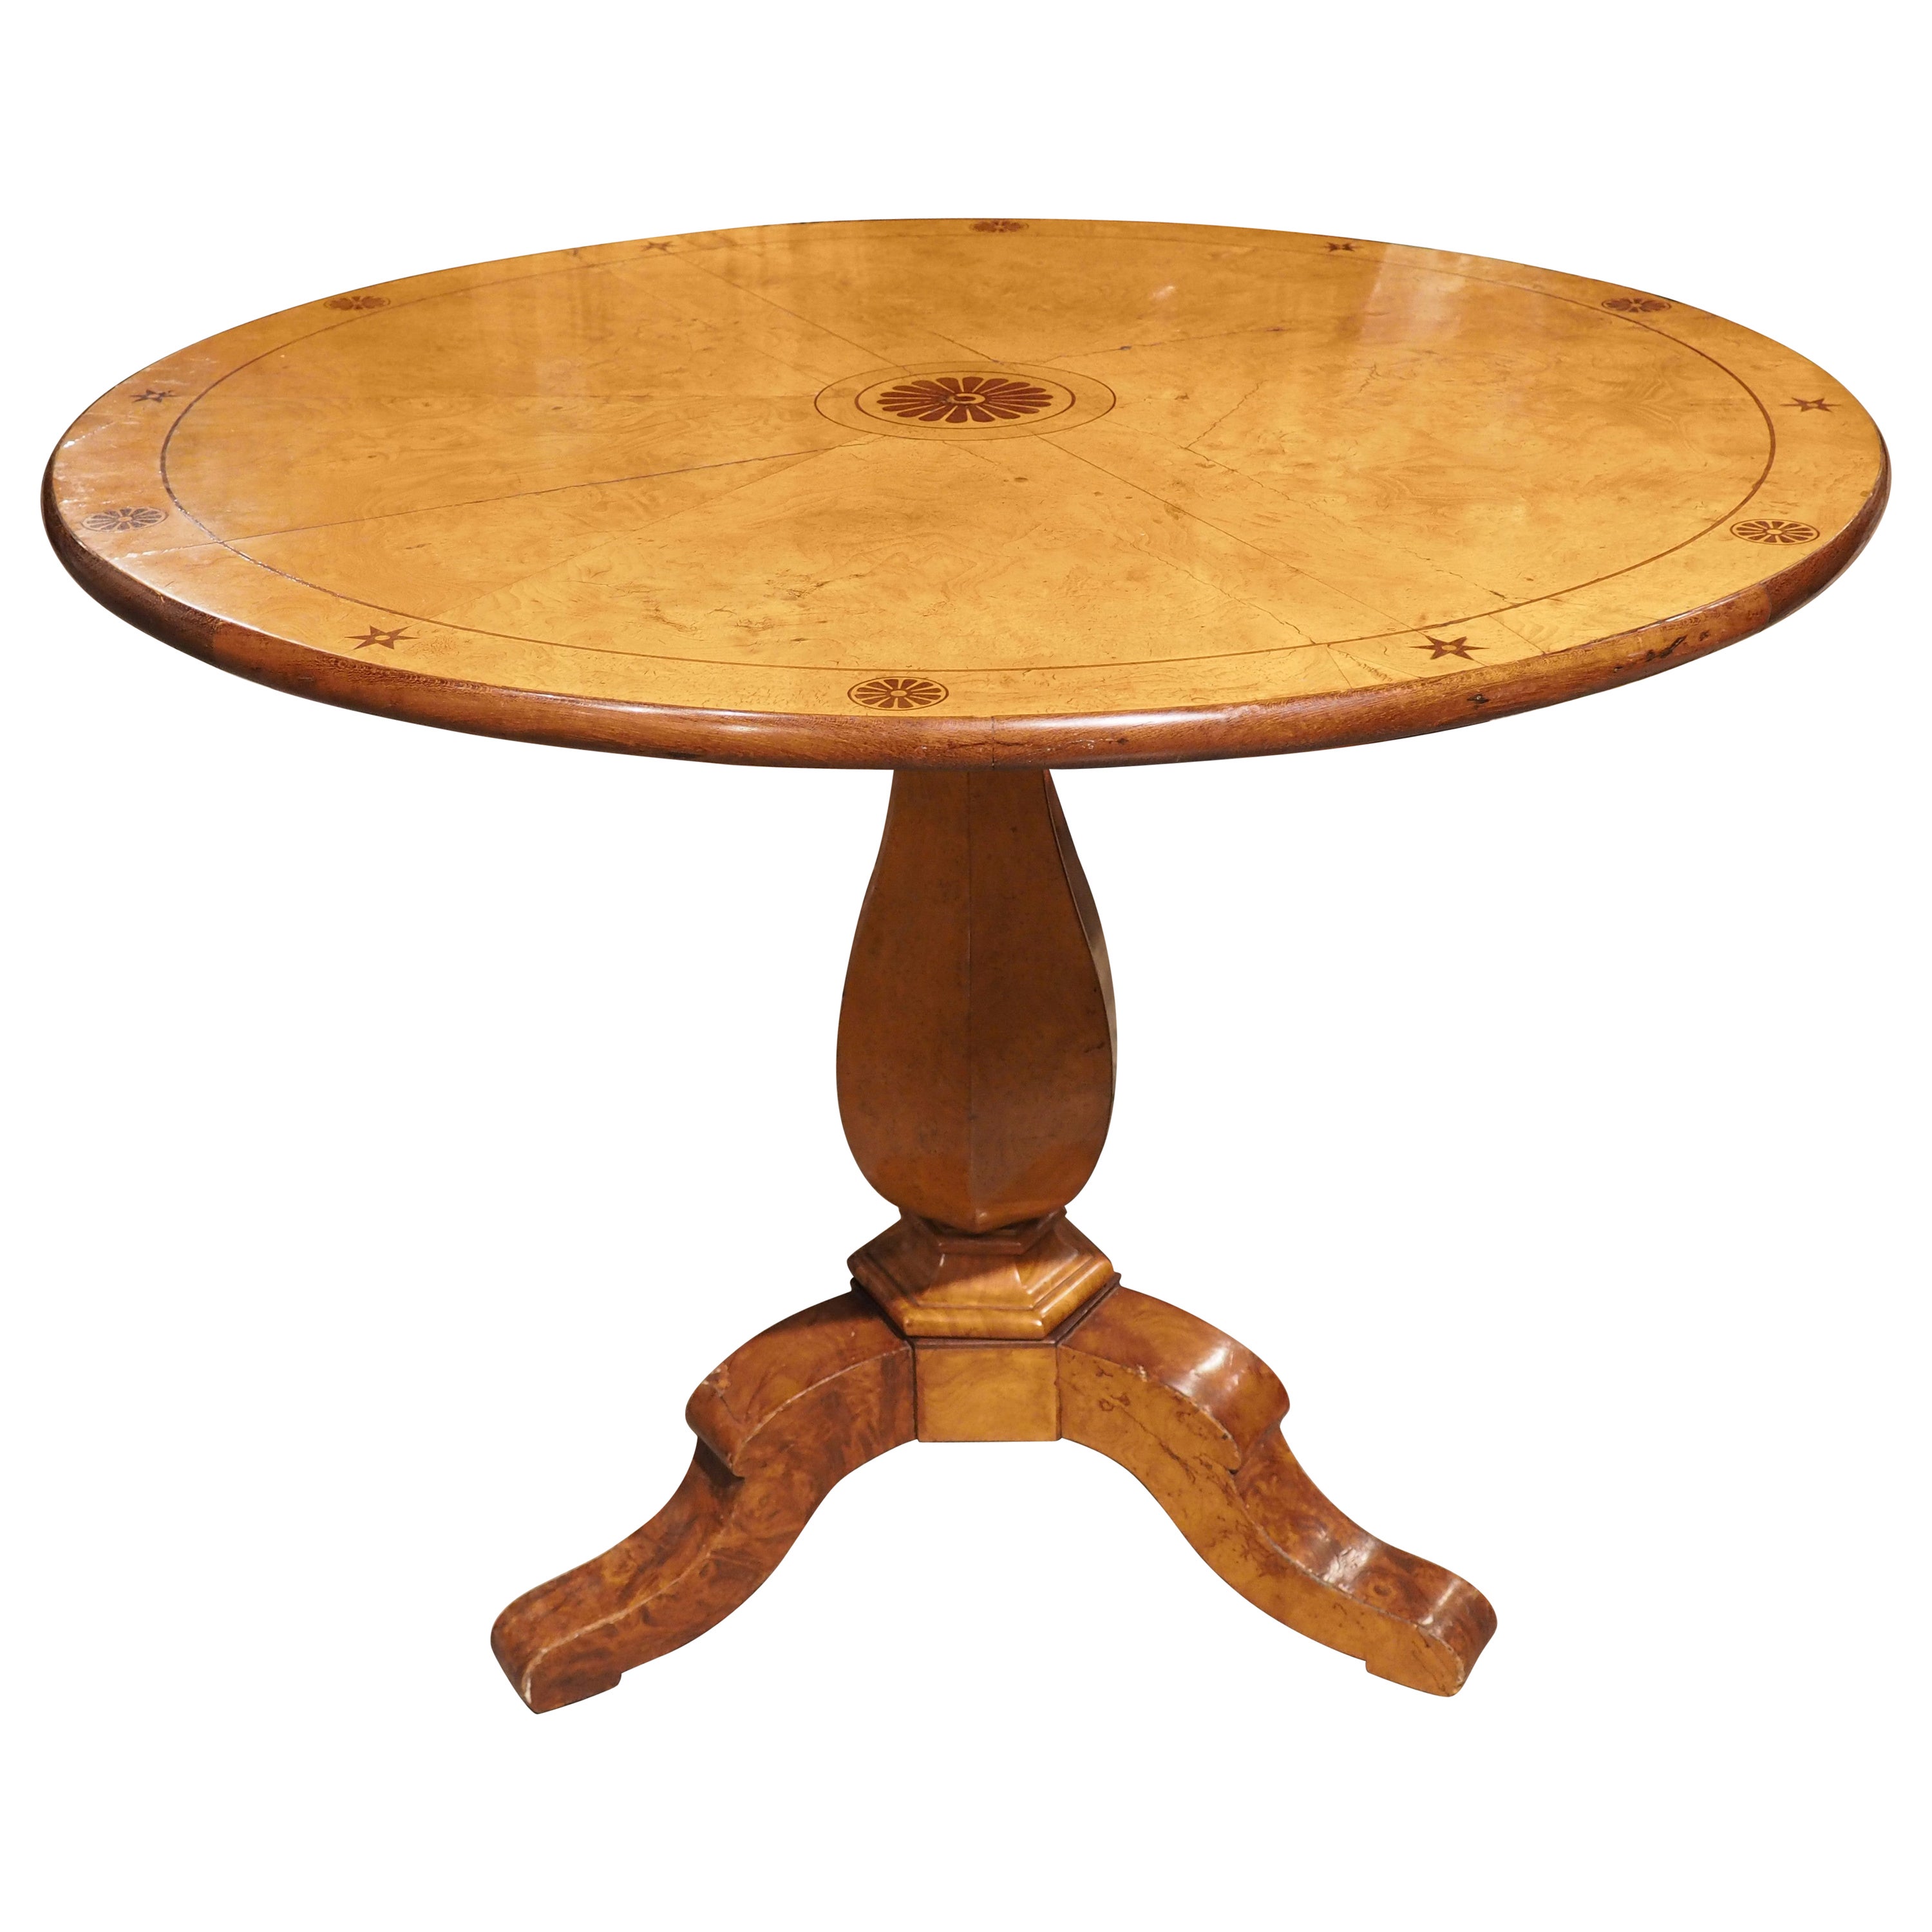 Circa 1830 Louis Philippe Tilt Top Burl Lemonwood Table from France